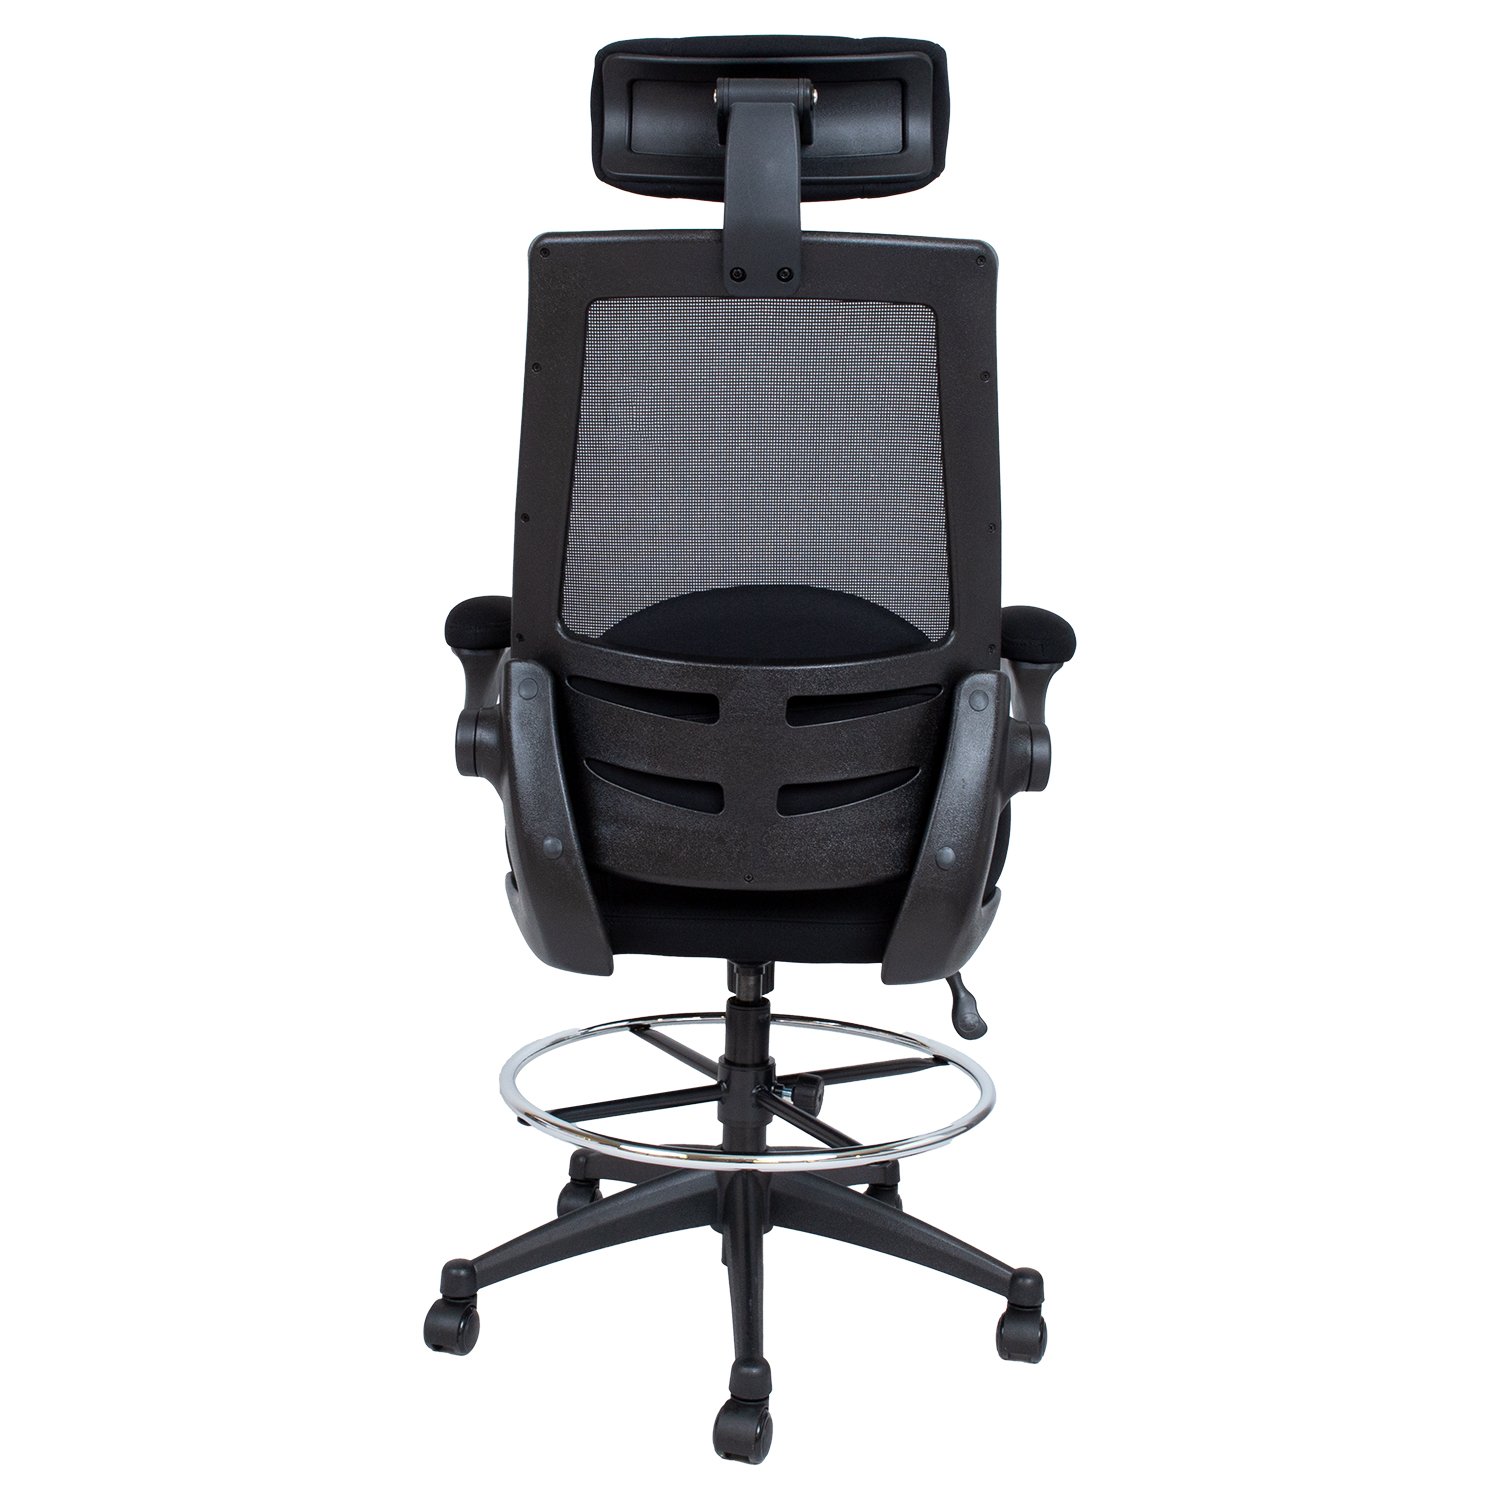 Biuro kėdė MILLER, 70x71x134-153.5 cm, juoda - 4